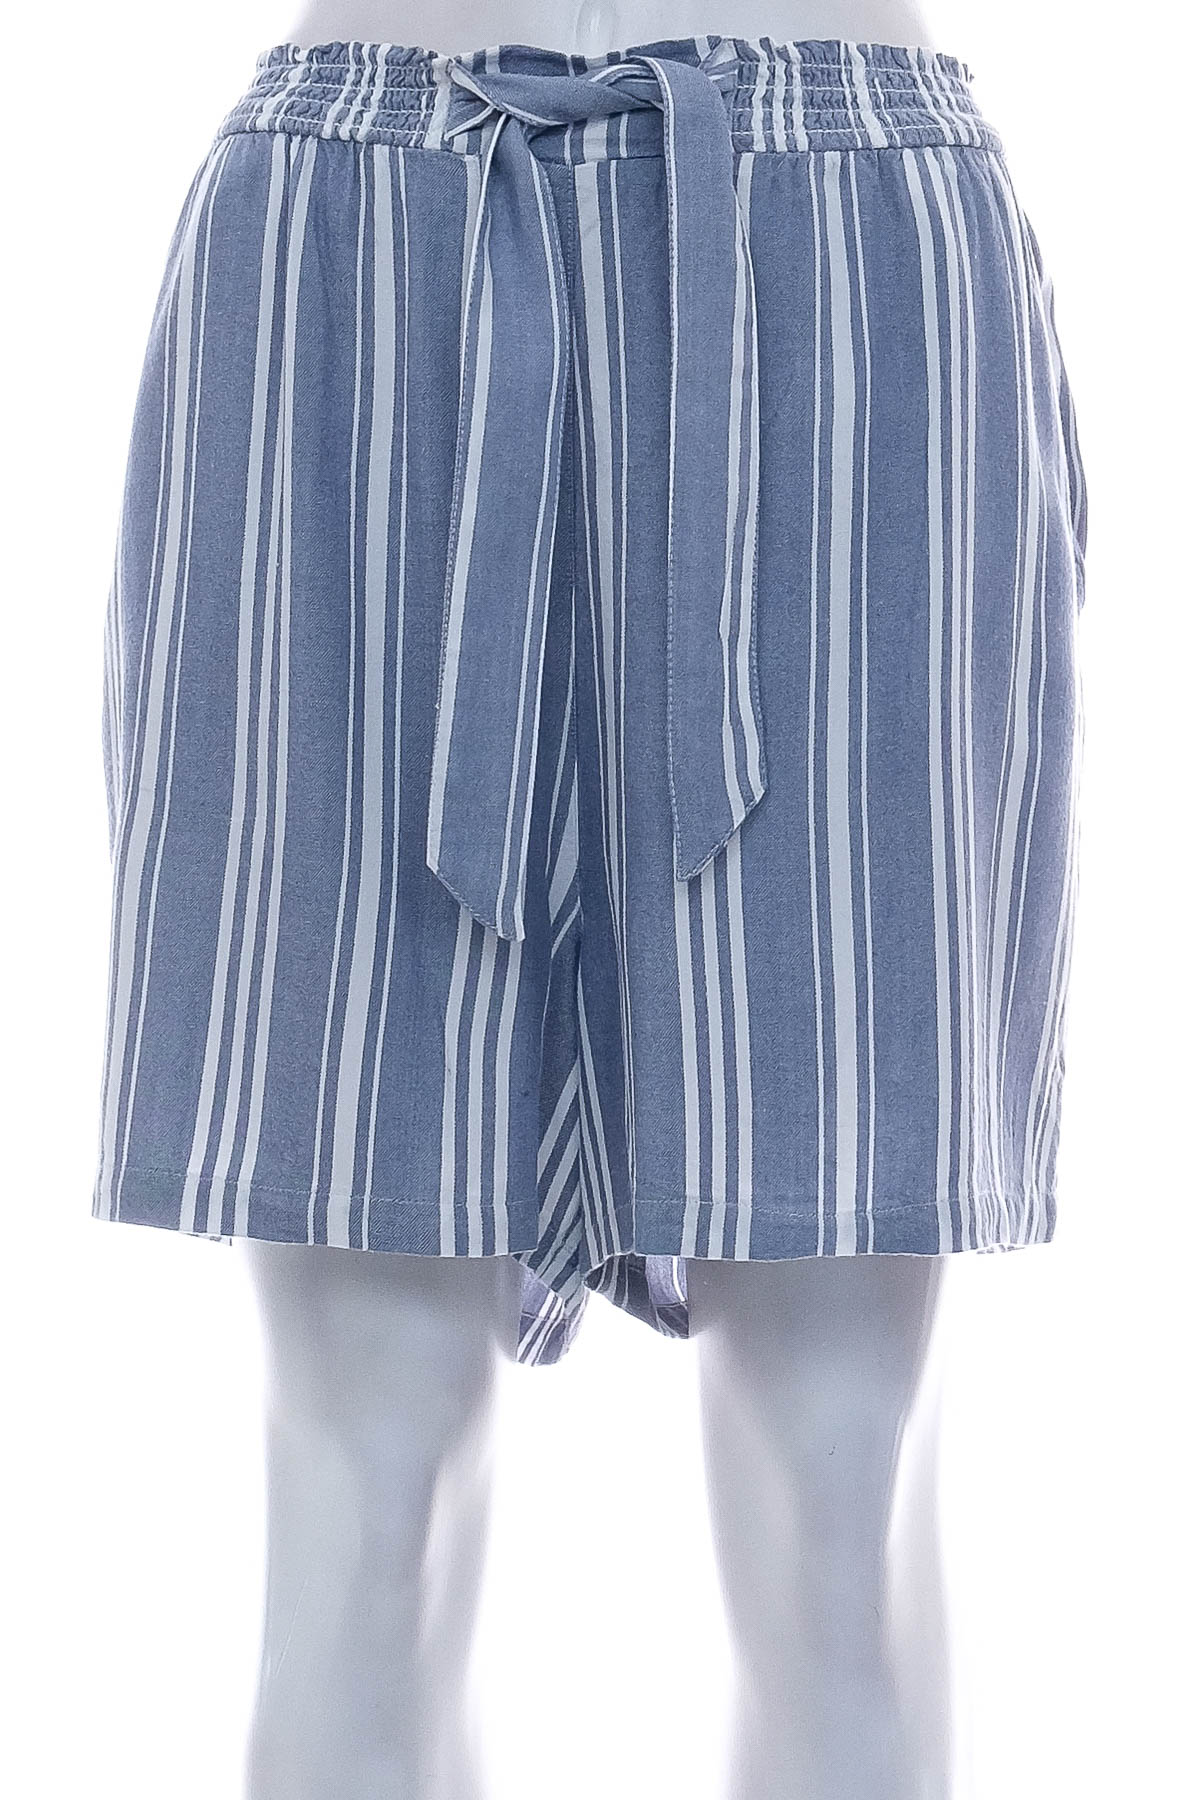 Female shorts - G!na - 0